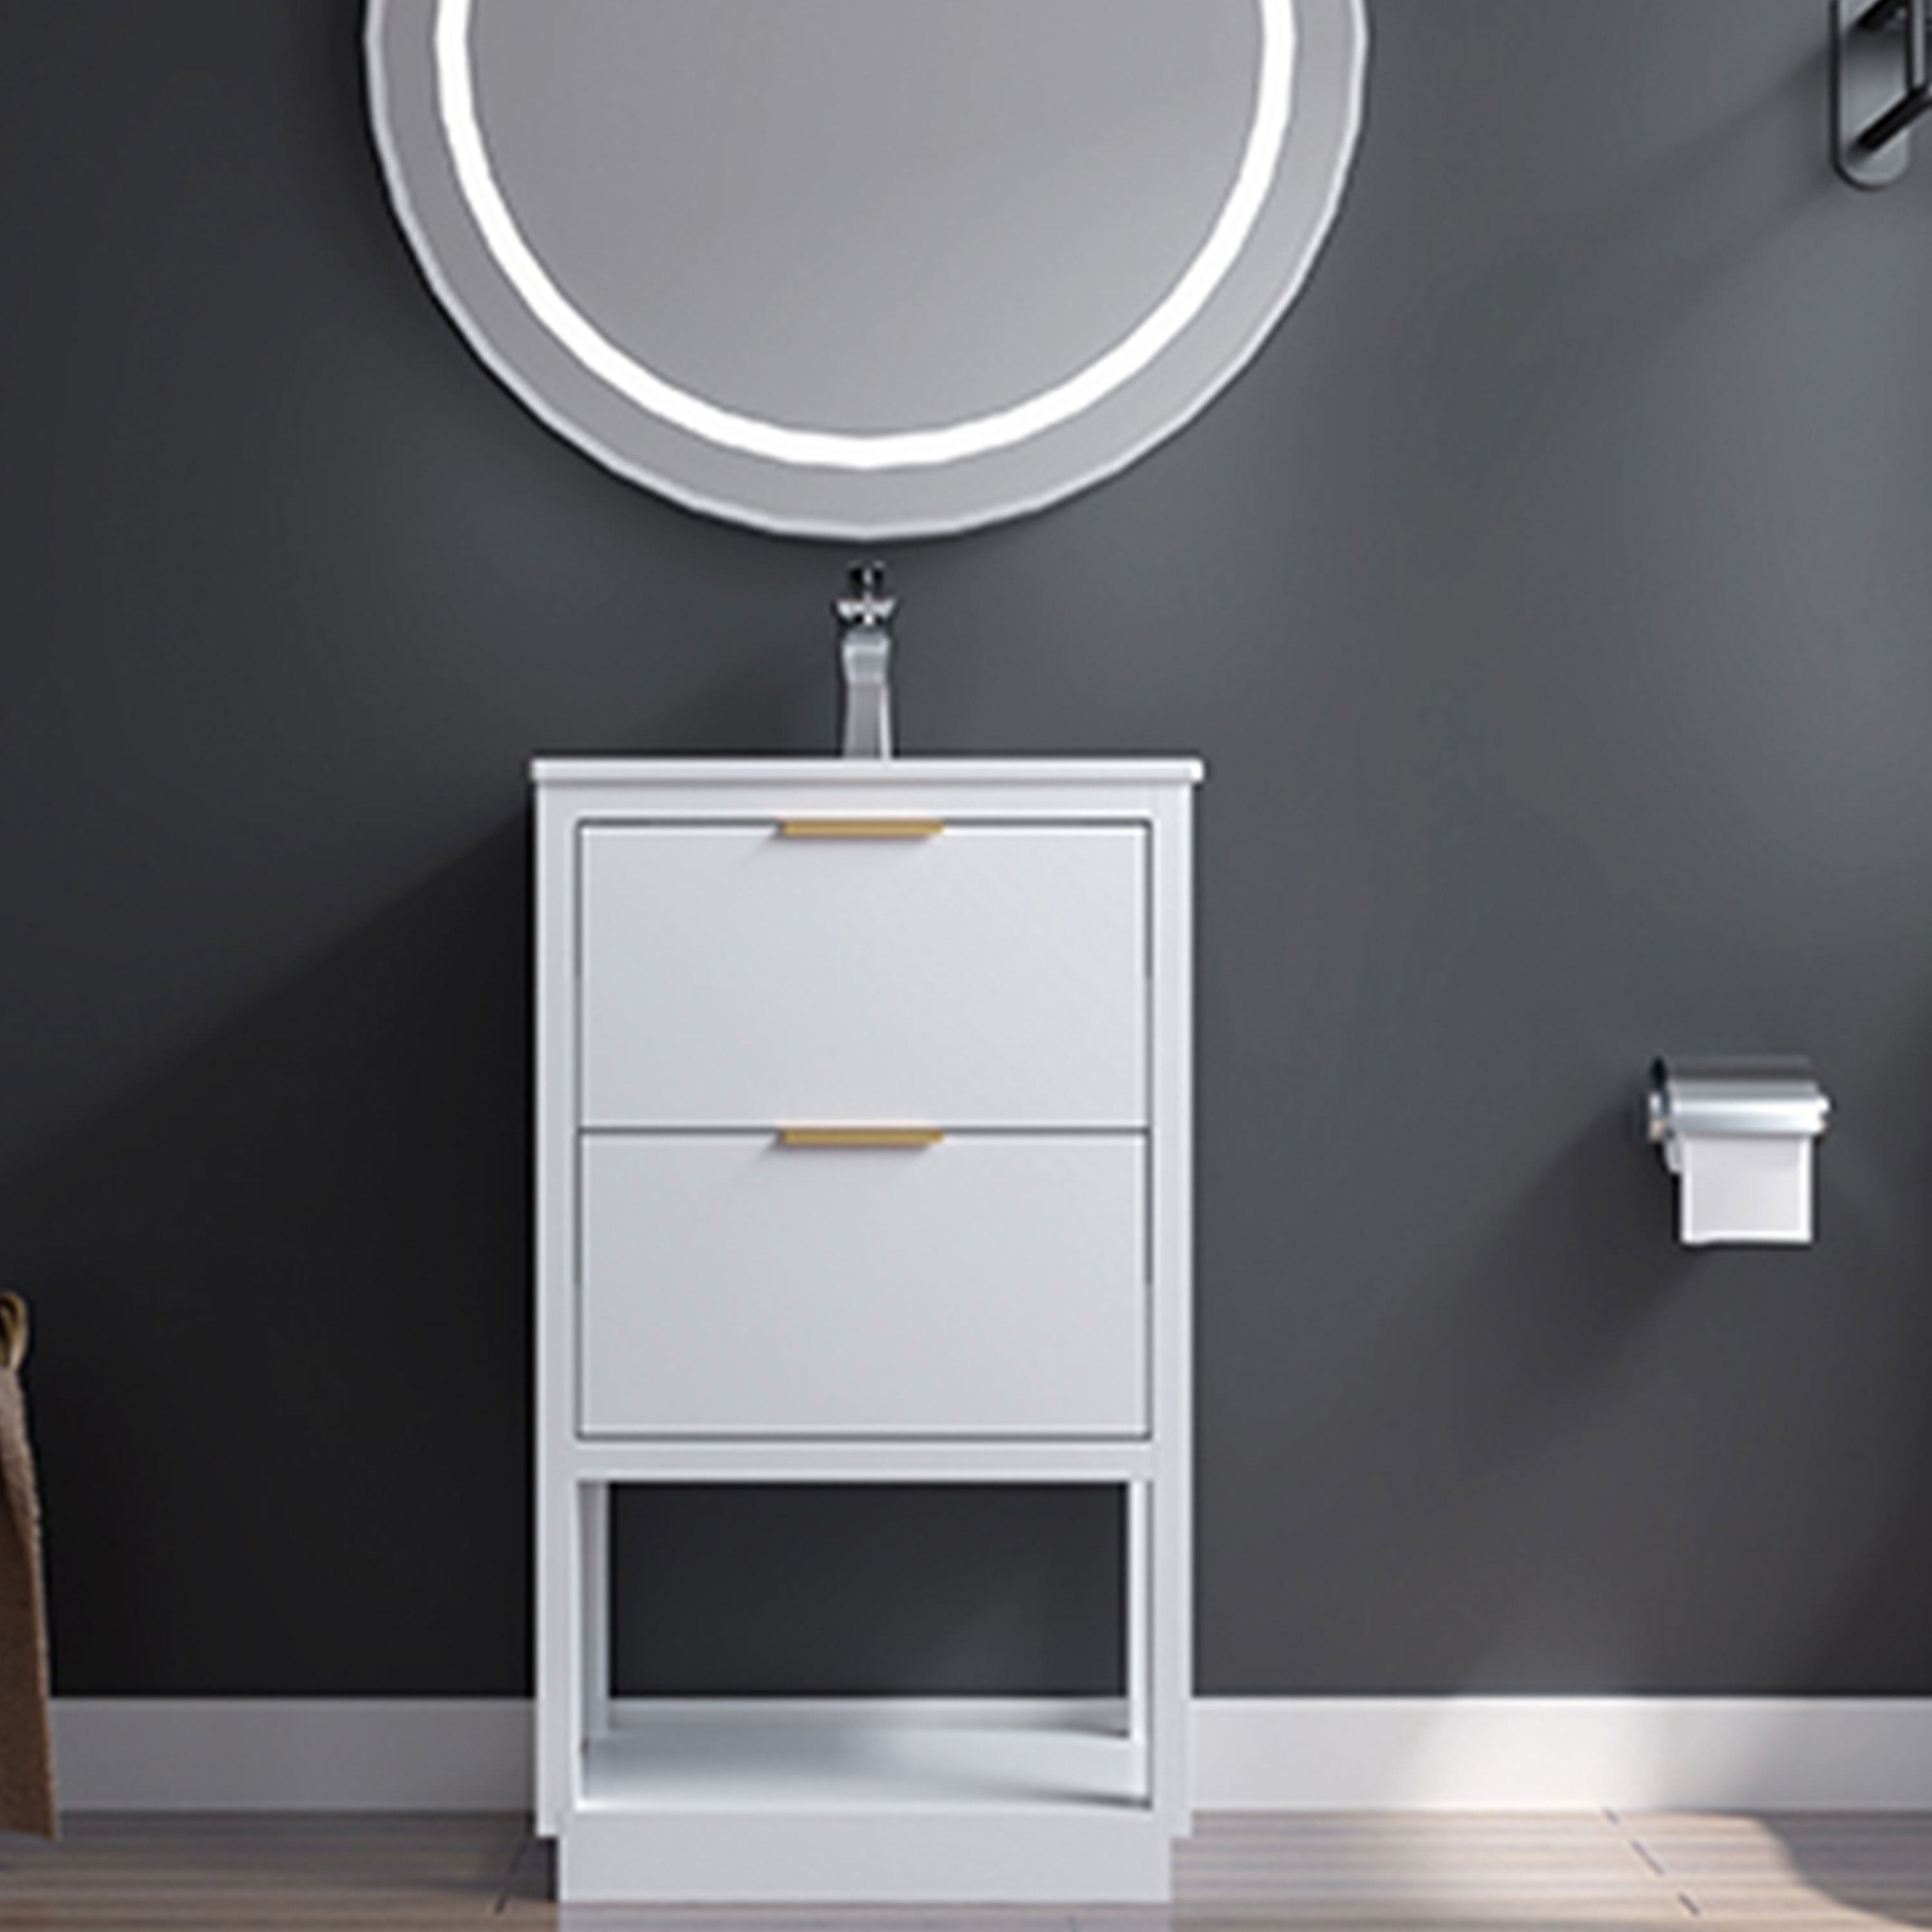 MEJE #S05B – 20 inch Single Sink Bathroom Vanity Set with Ceramic Undermount Vessel Sink for Small Space, Modern Storage Cabinet Set, White